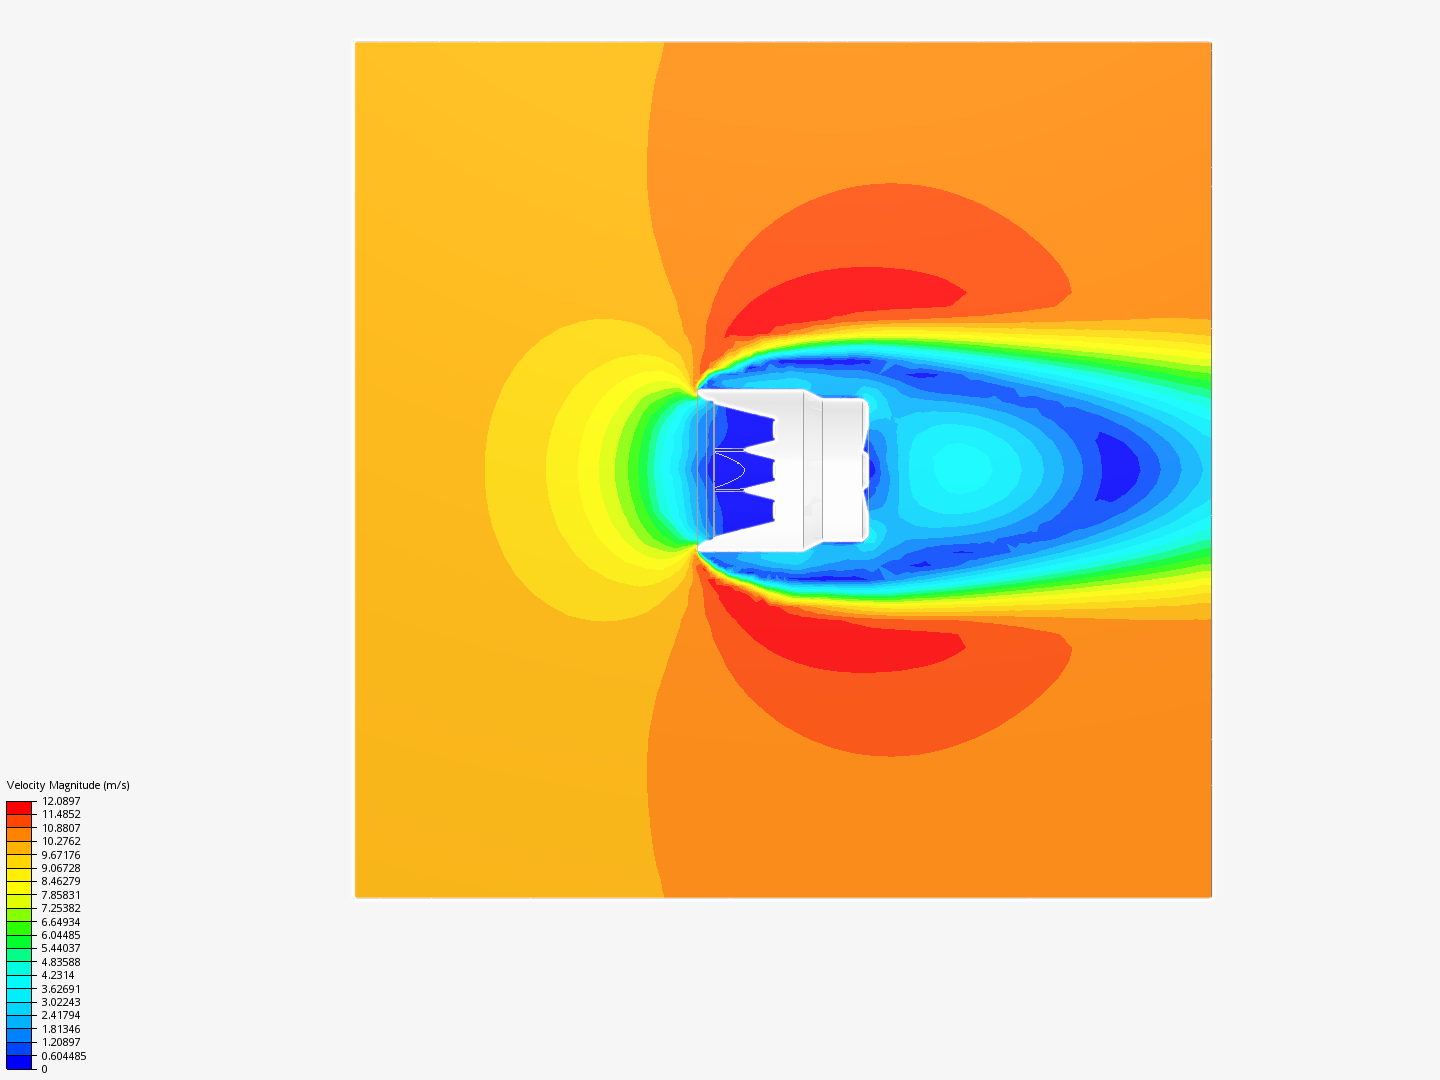 Heat transfer analysis image